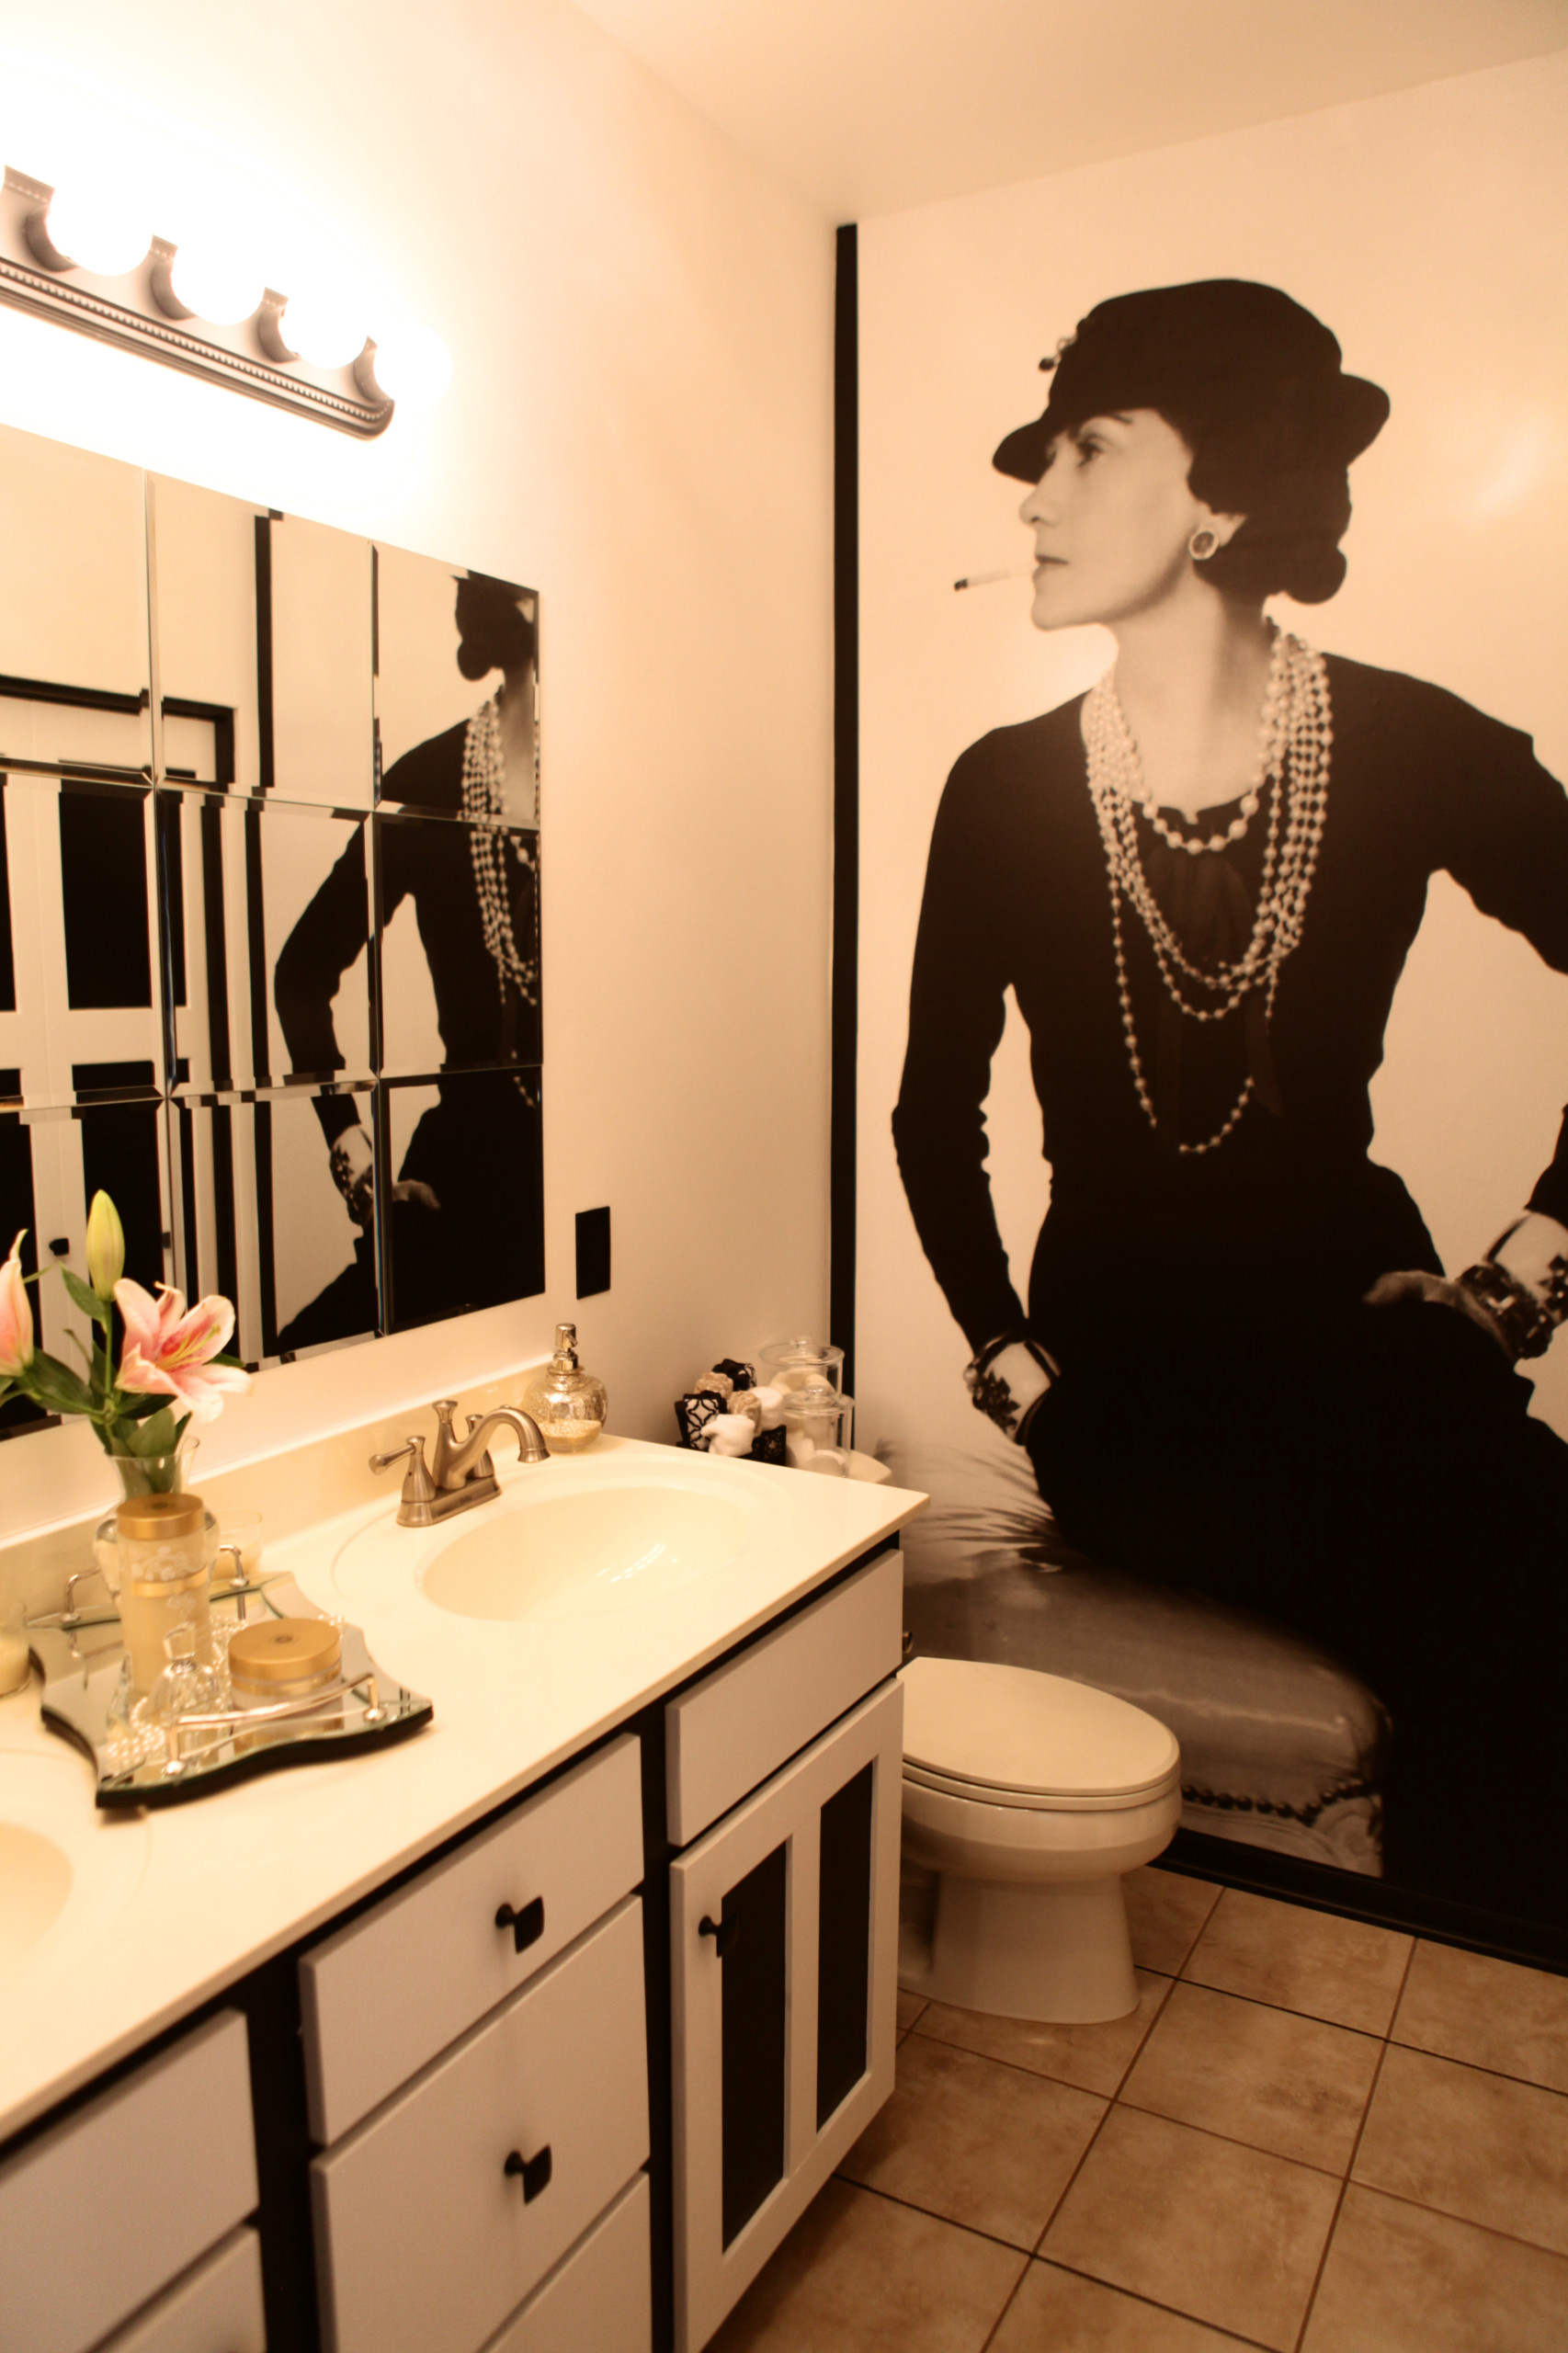 Goddess of Fashion: Coco Chanel